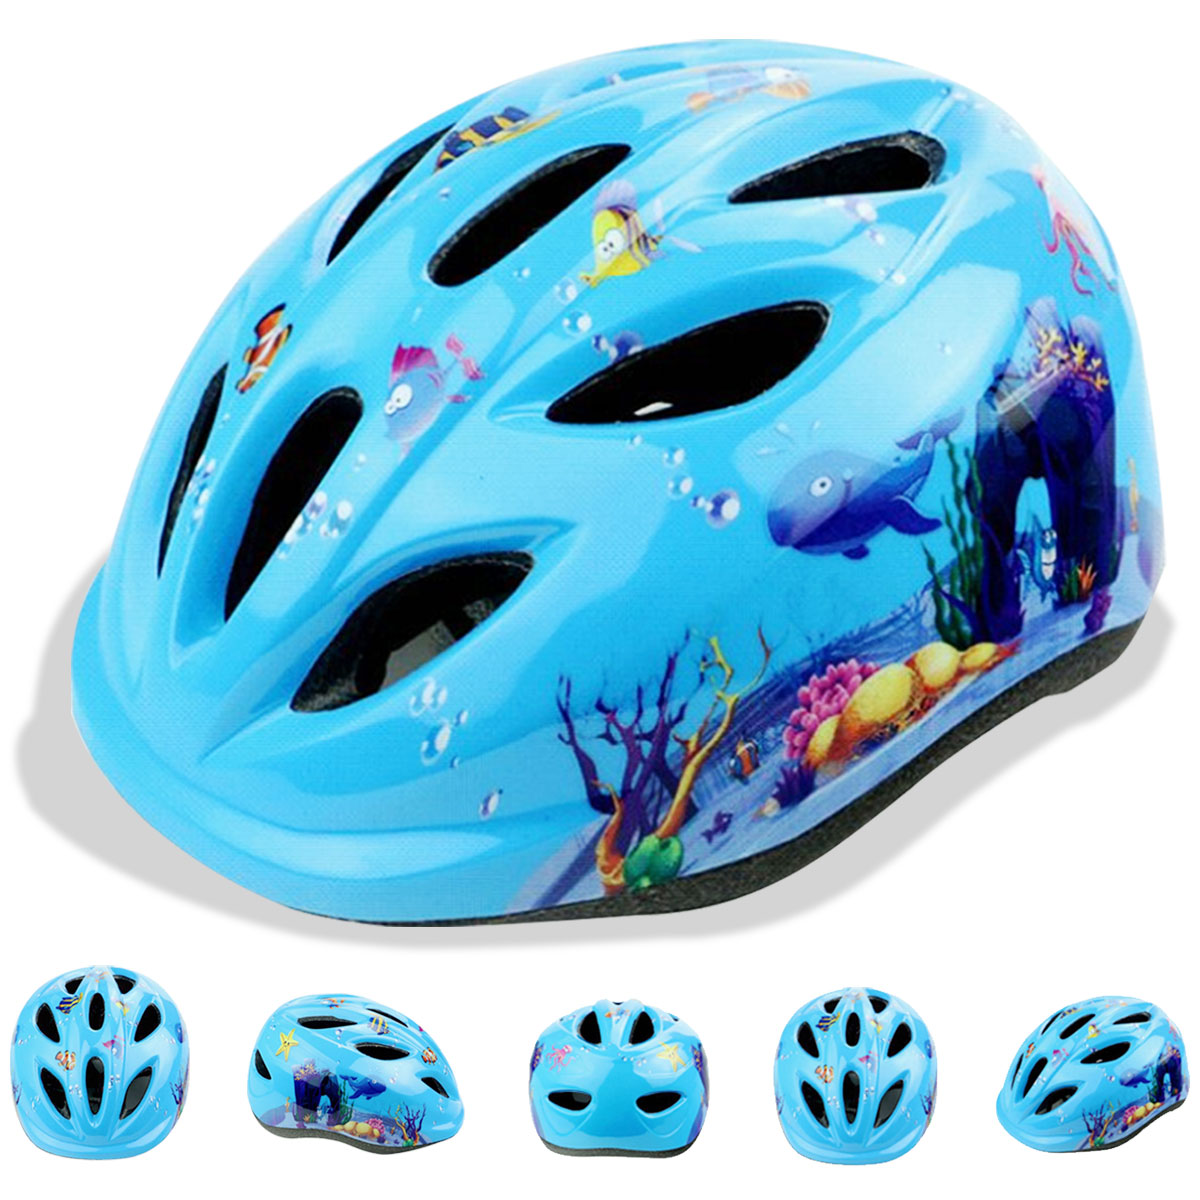 Kids Safety Children Helmet for Bike Scooter Bicycle Skate Board Adjustable - Auto GoShop